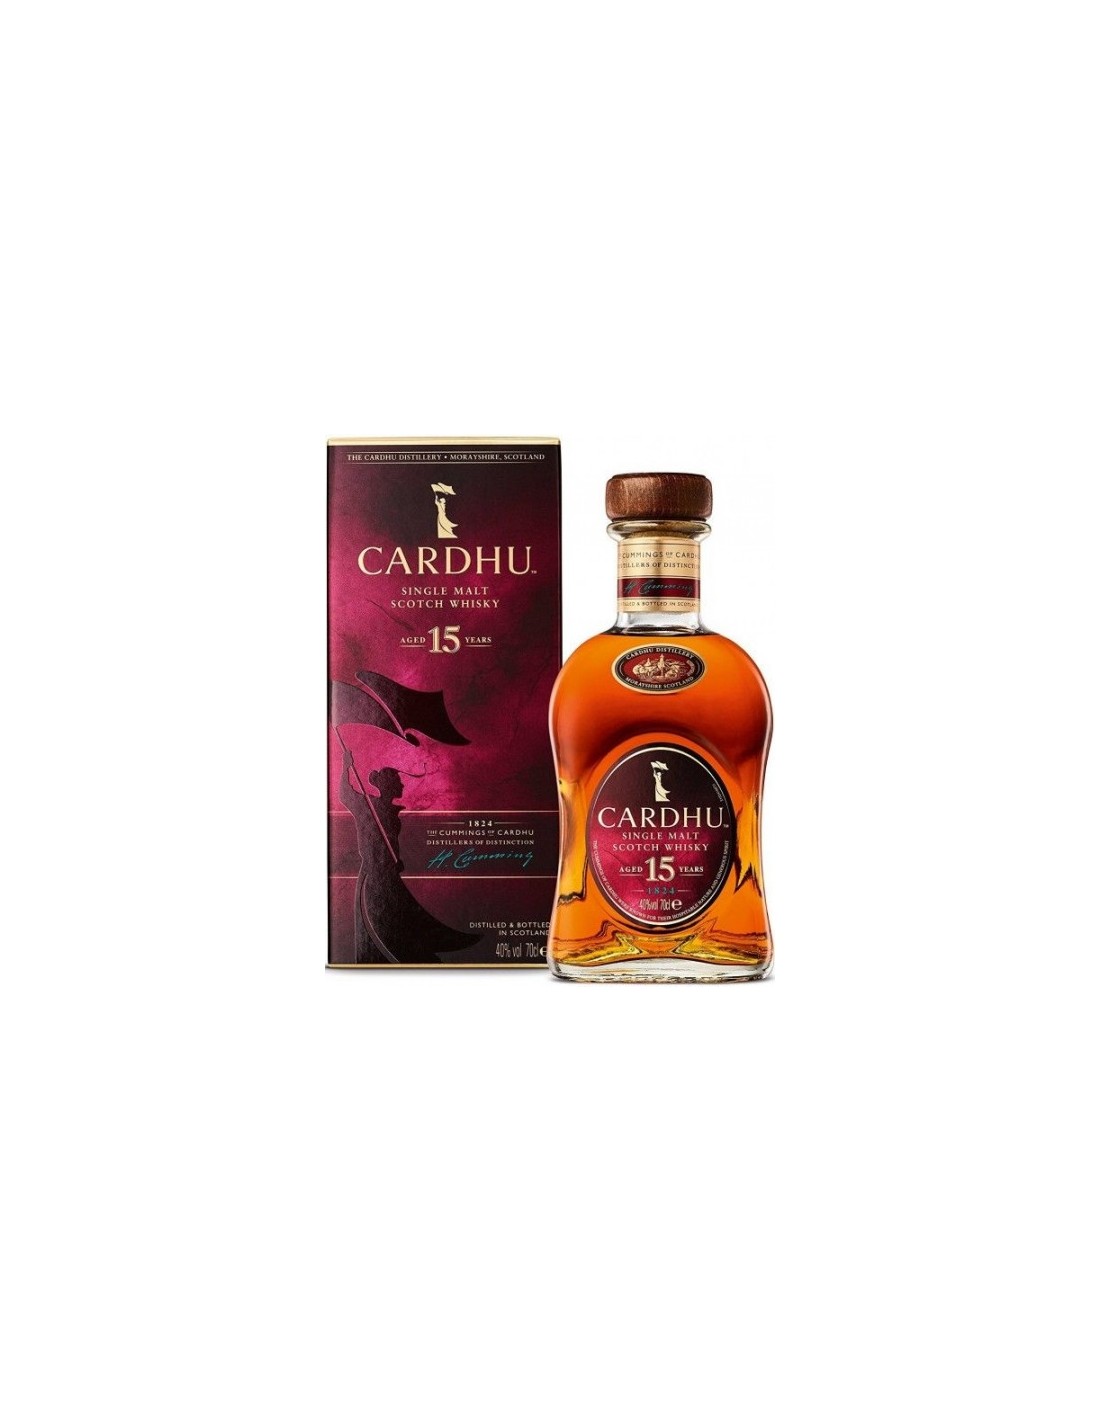 Whisky Cardhu, 0.7L, 15 ani, 40% alc., Scotia alcooldiscount.ro